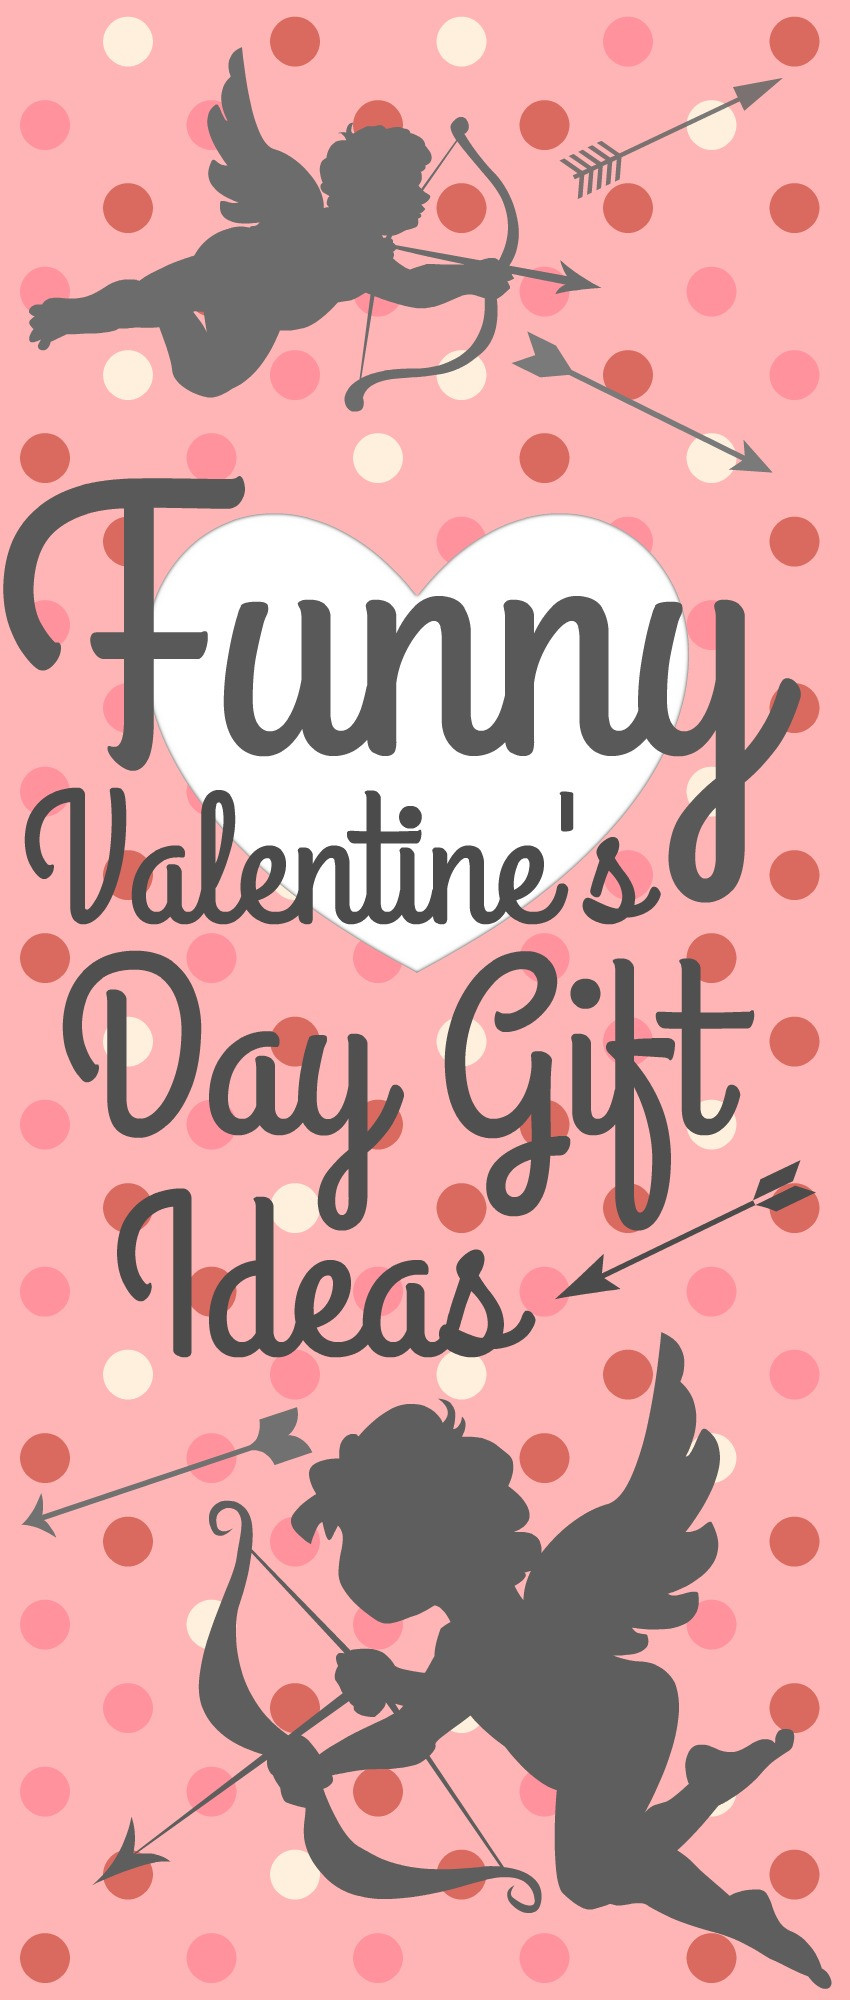 Valentine Gag Gift Ideas
 Funny Valentine s Day Gifts